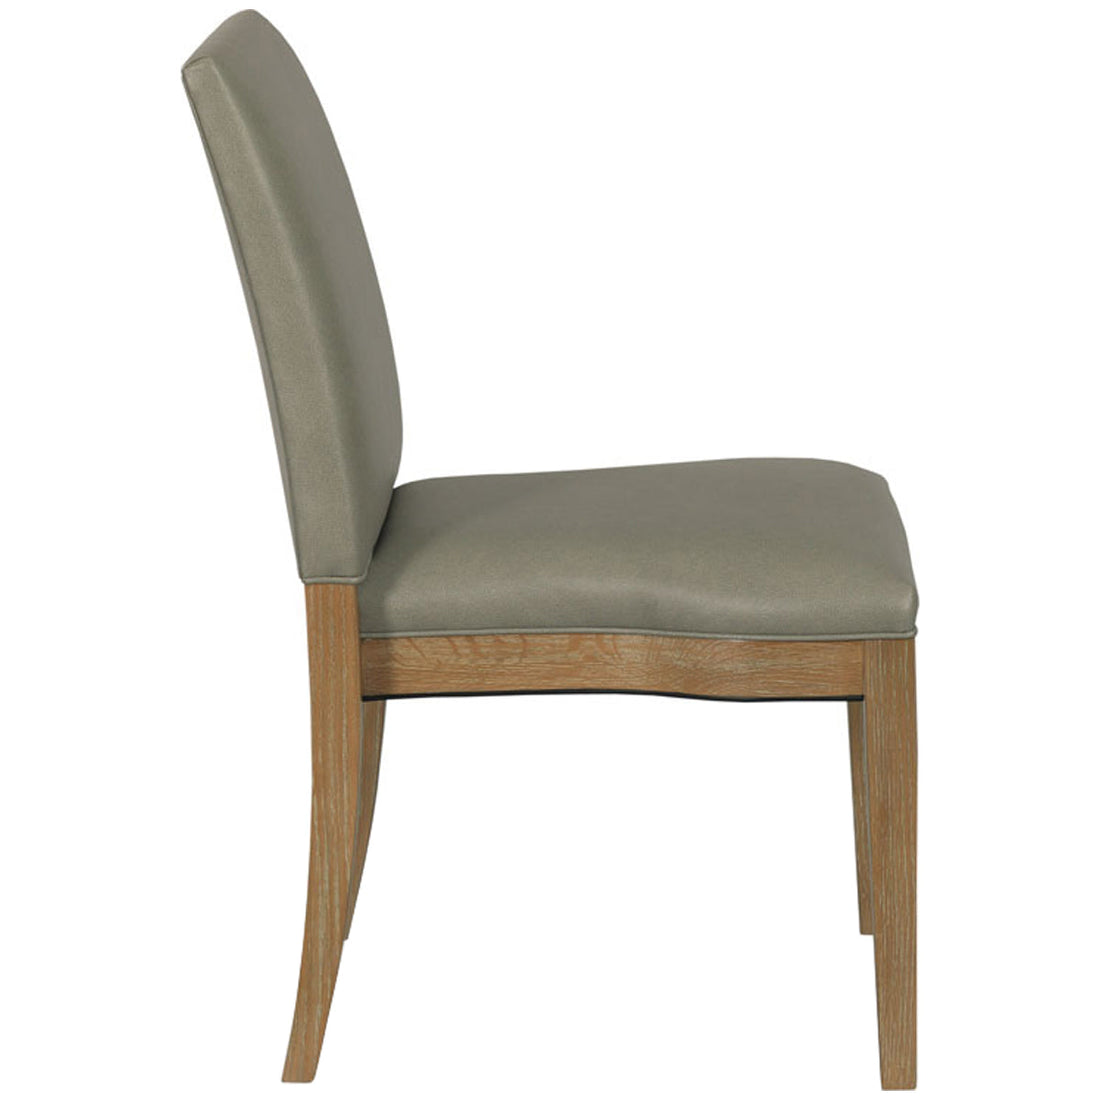 Woodbridge Furniture Odyssey Stacking Chair